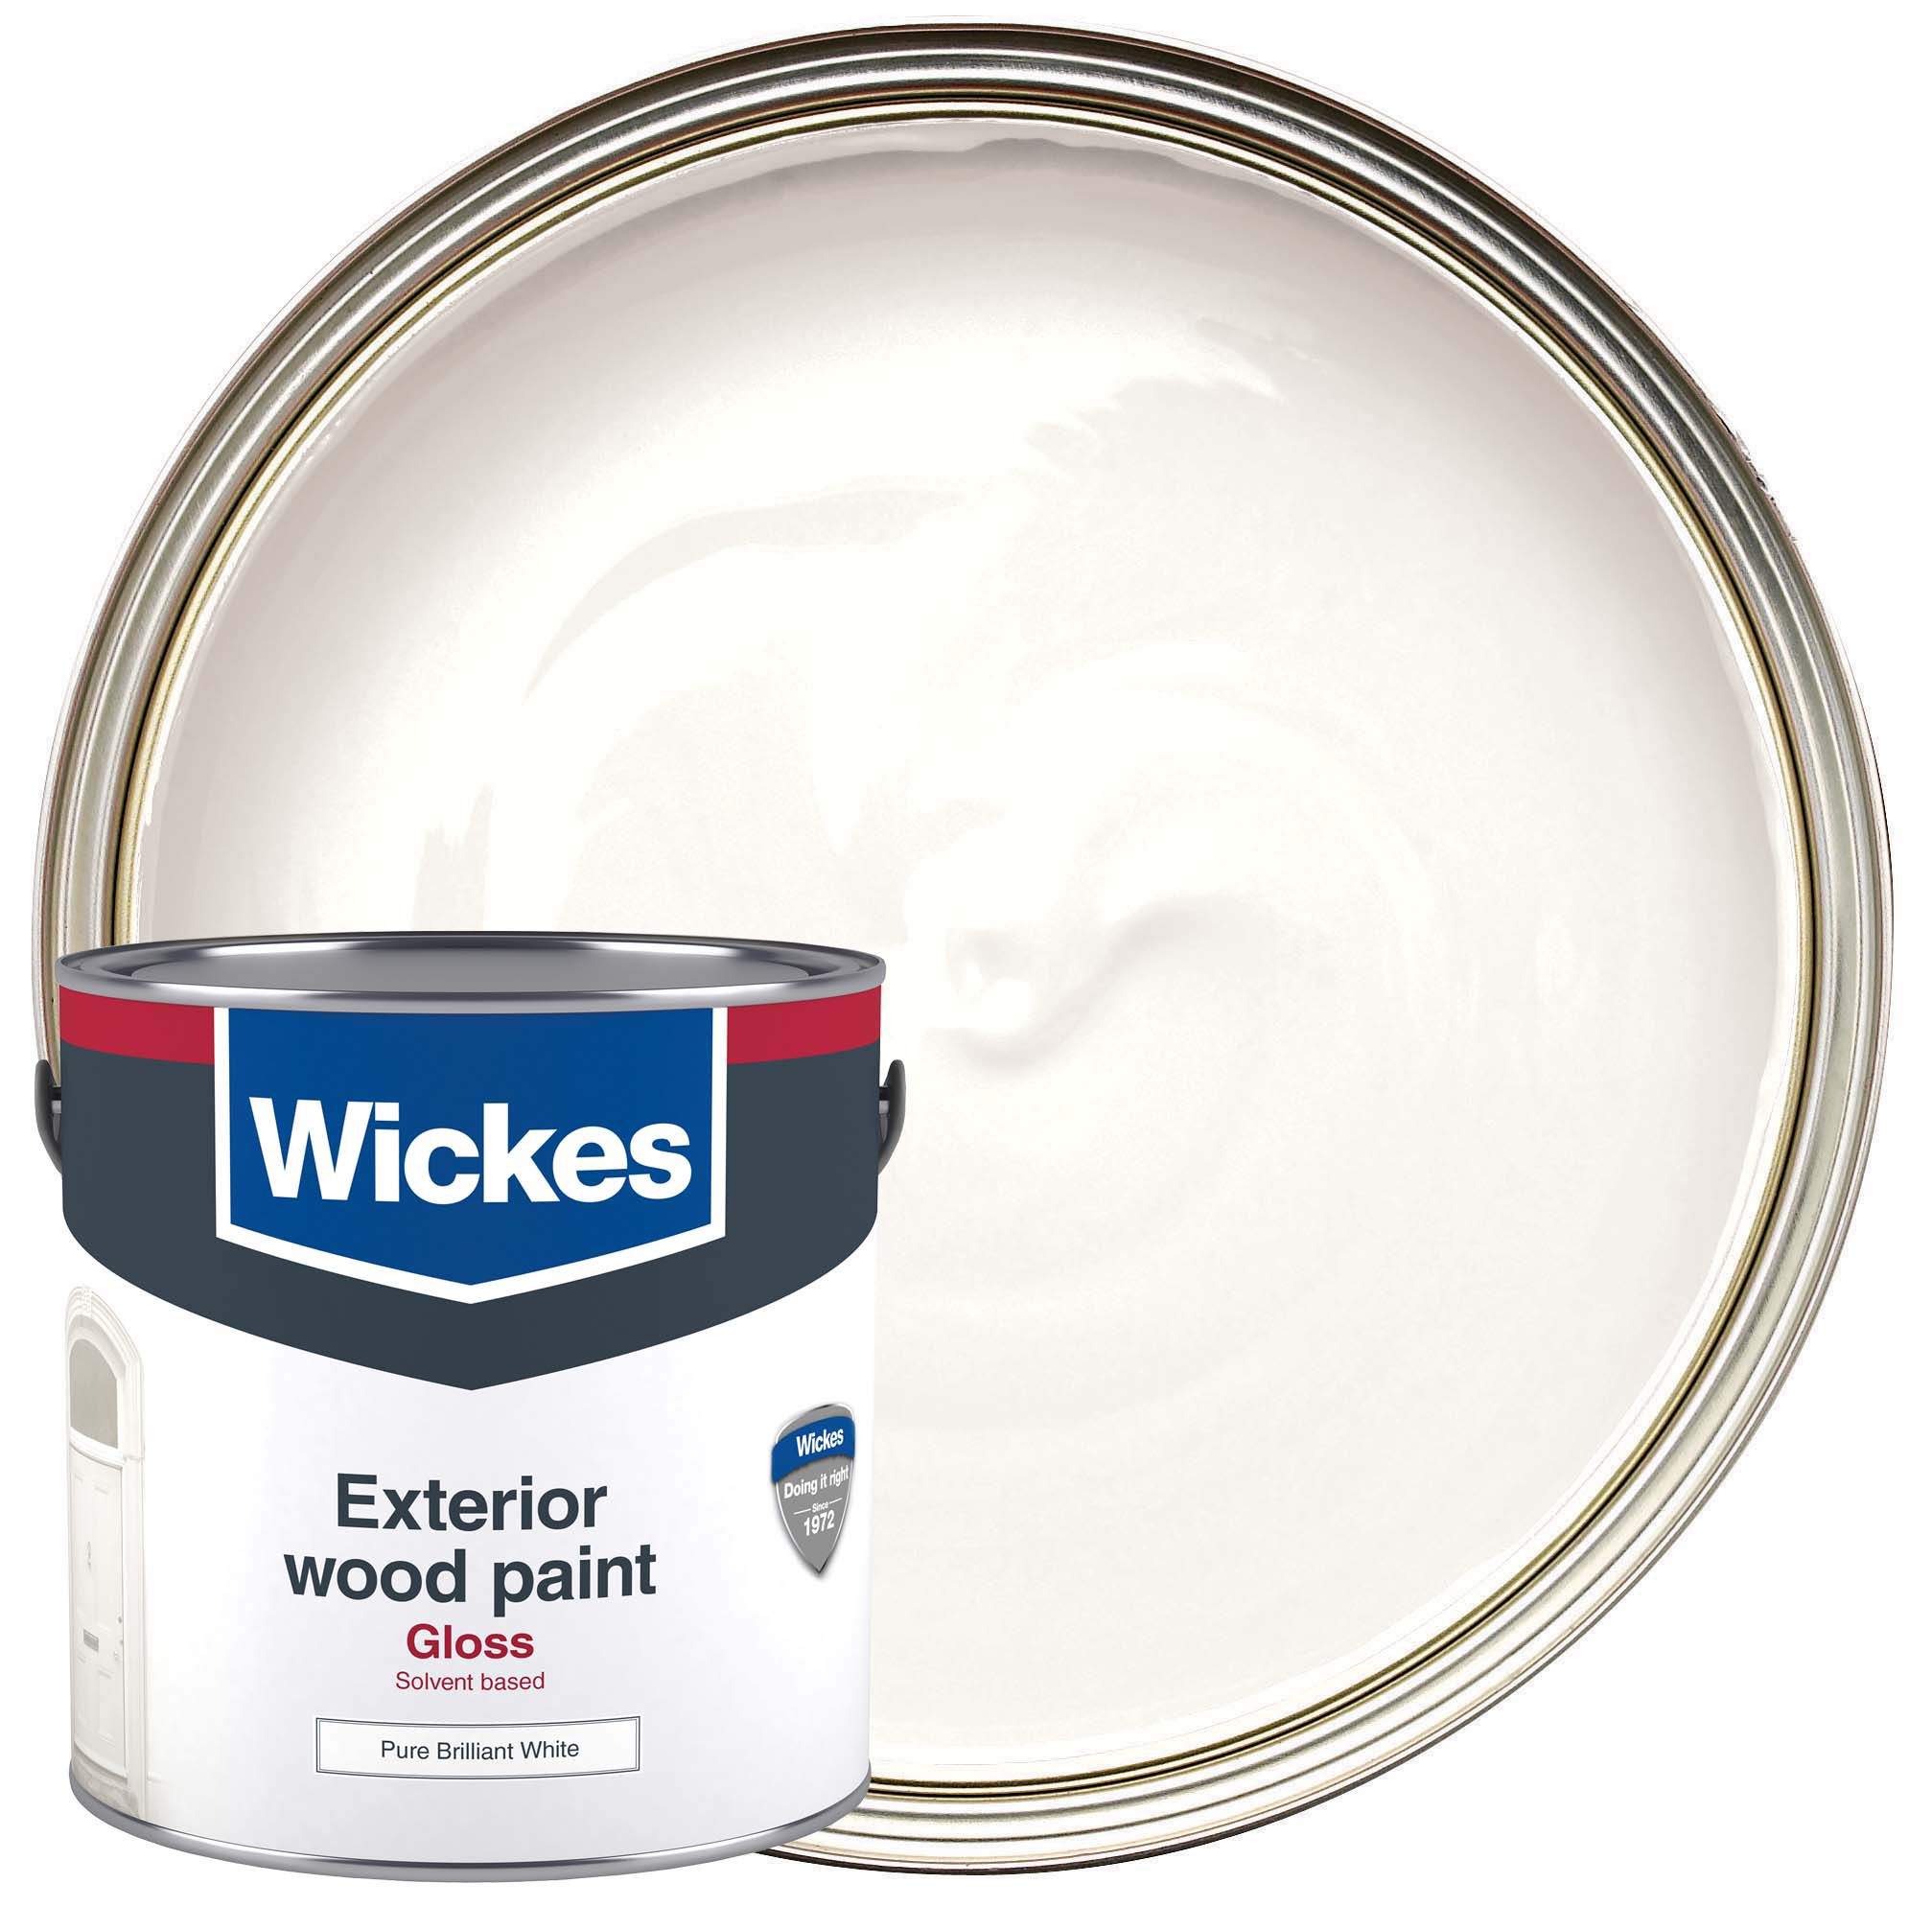 Wickes Exterior Gloss Paint - Pure Brilliant White - 2.5L